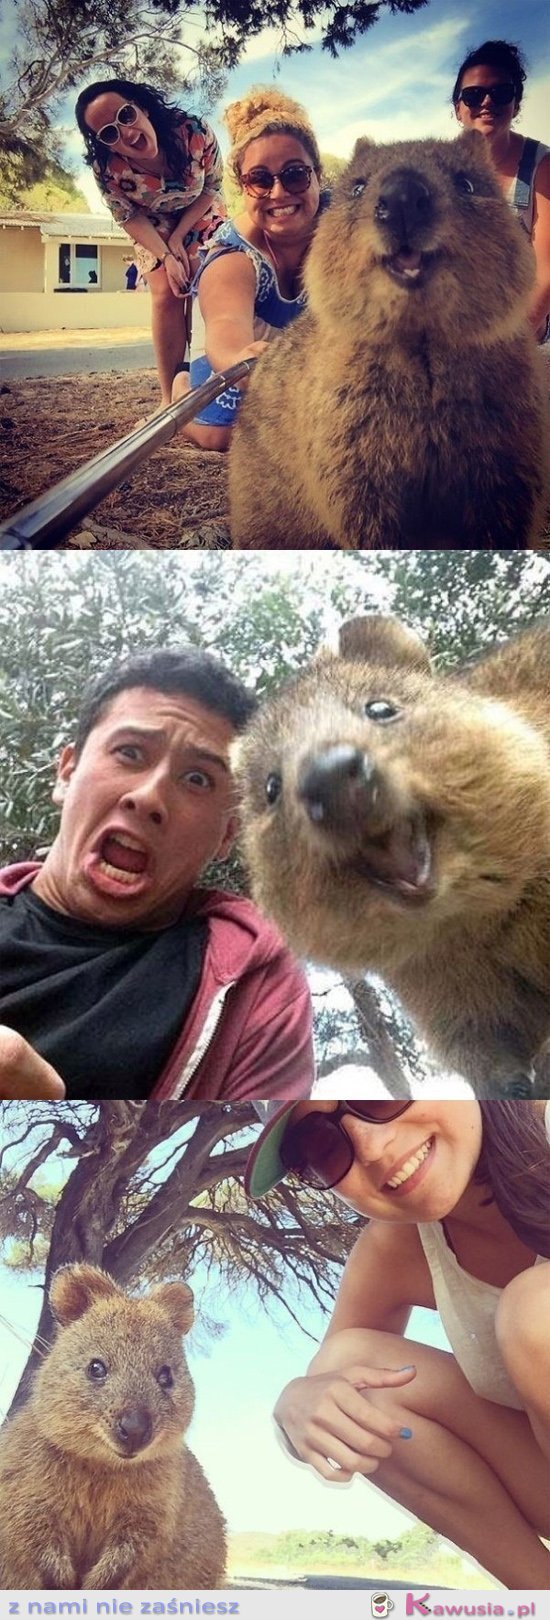 Nowa moda na selfie prosto z Australii